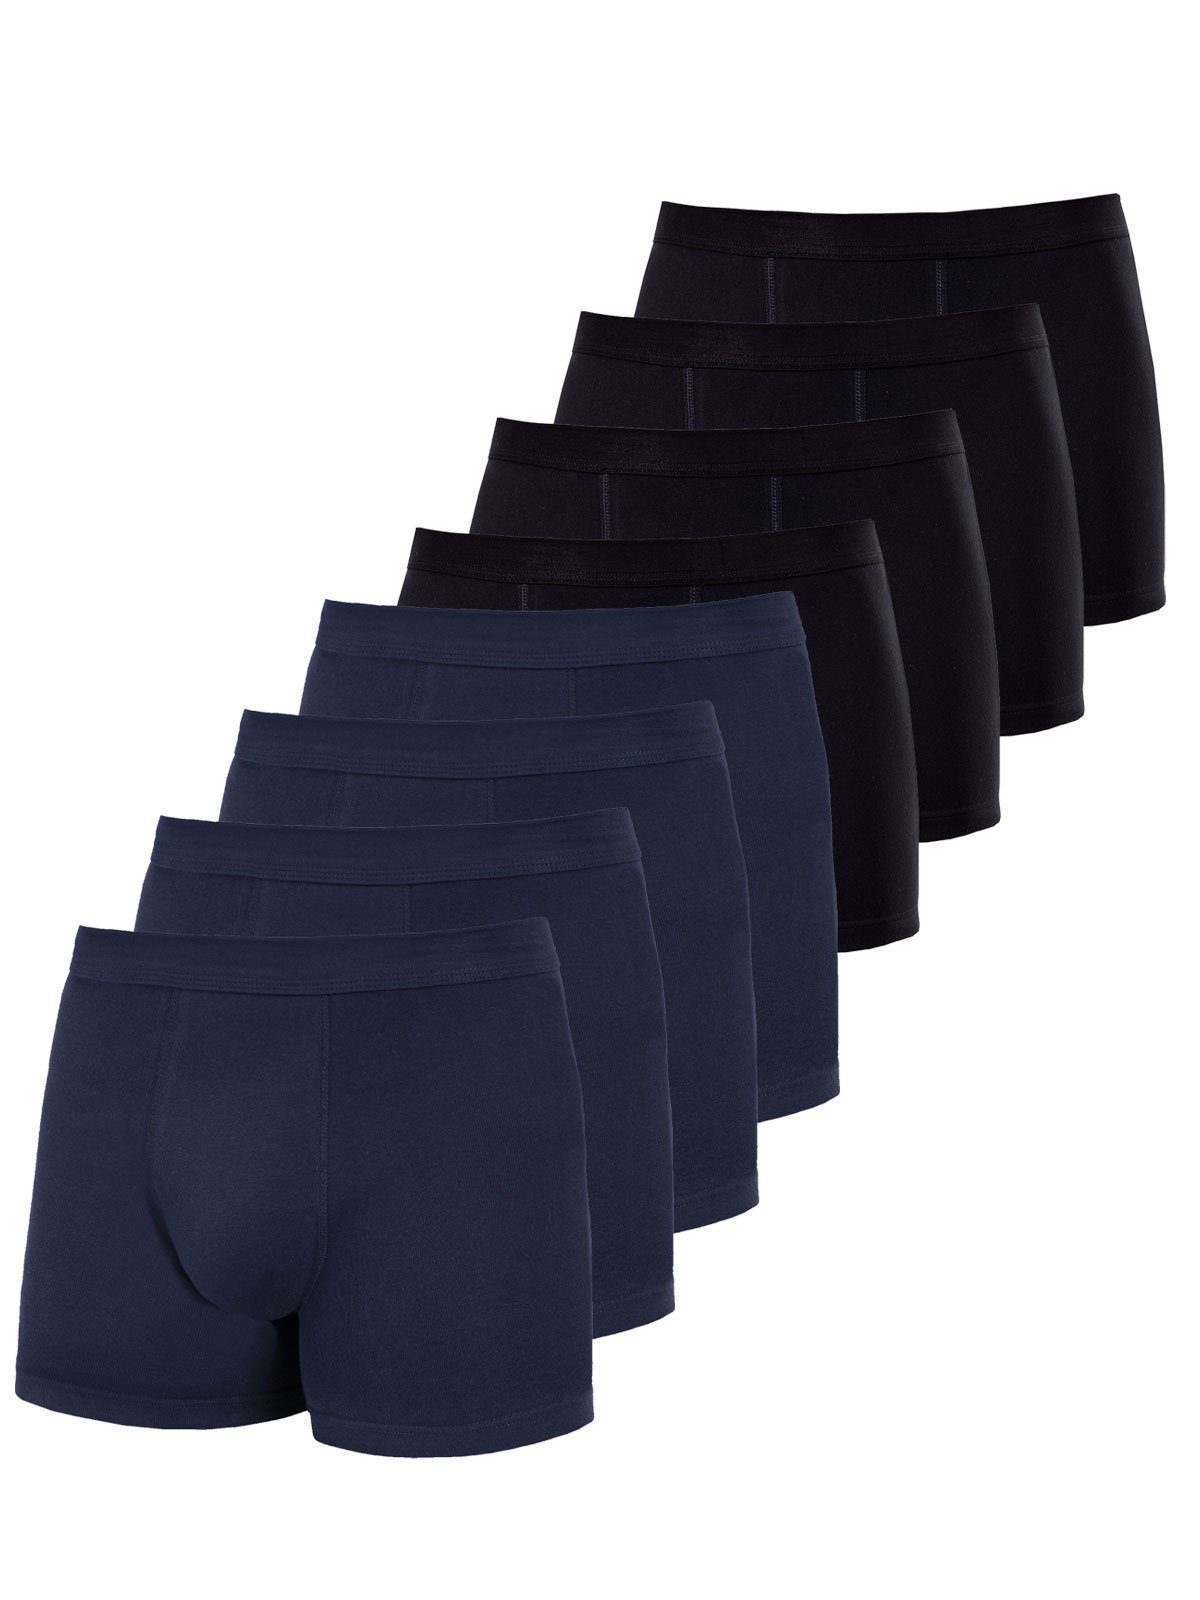 KUMPF Retro Pants 8er Sparpack Herren Pants Bio Cotton (Spar-Set, 8-St) - schwarz navy